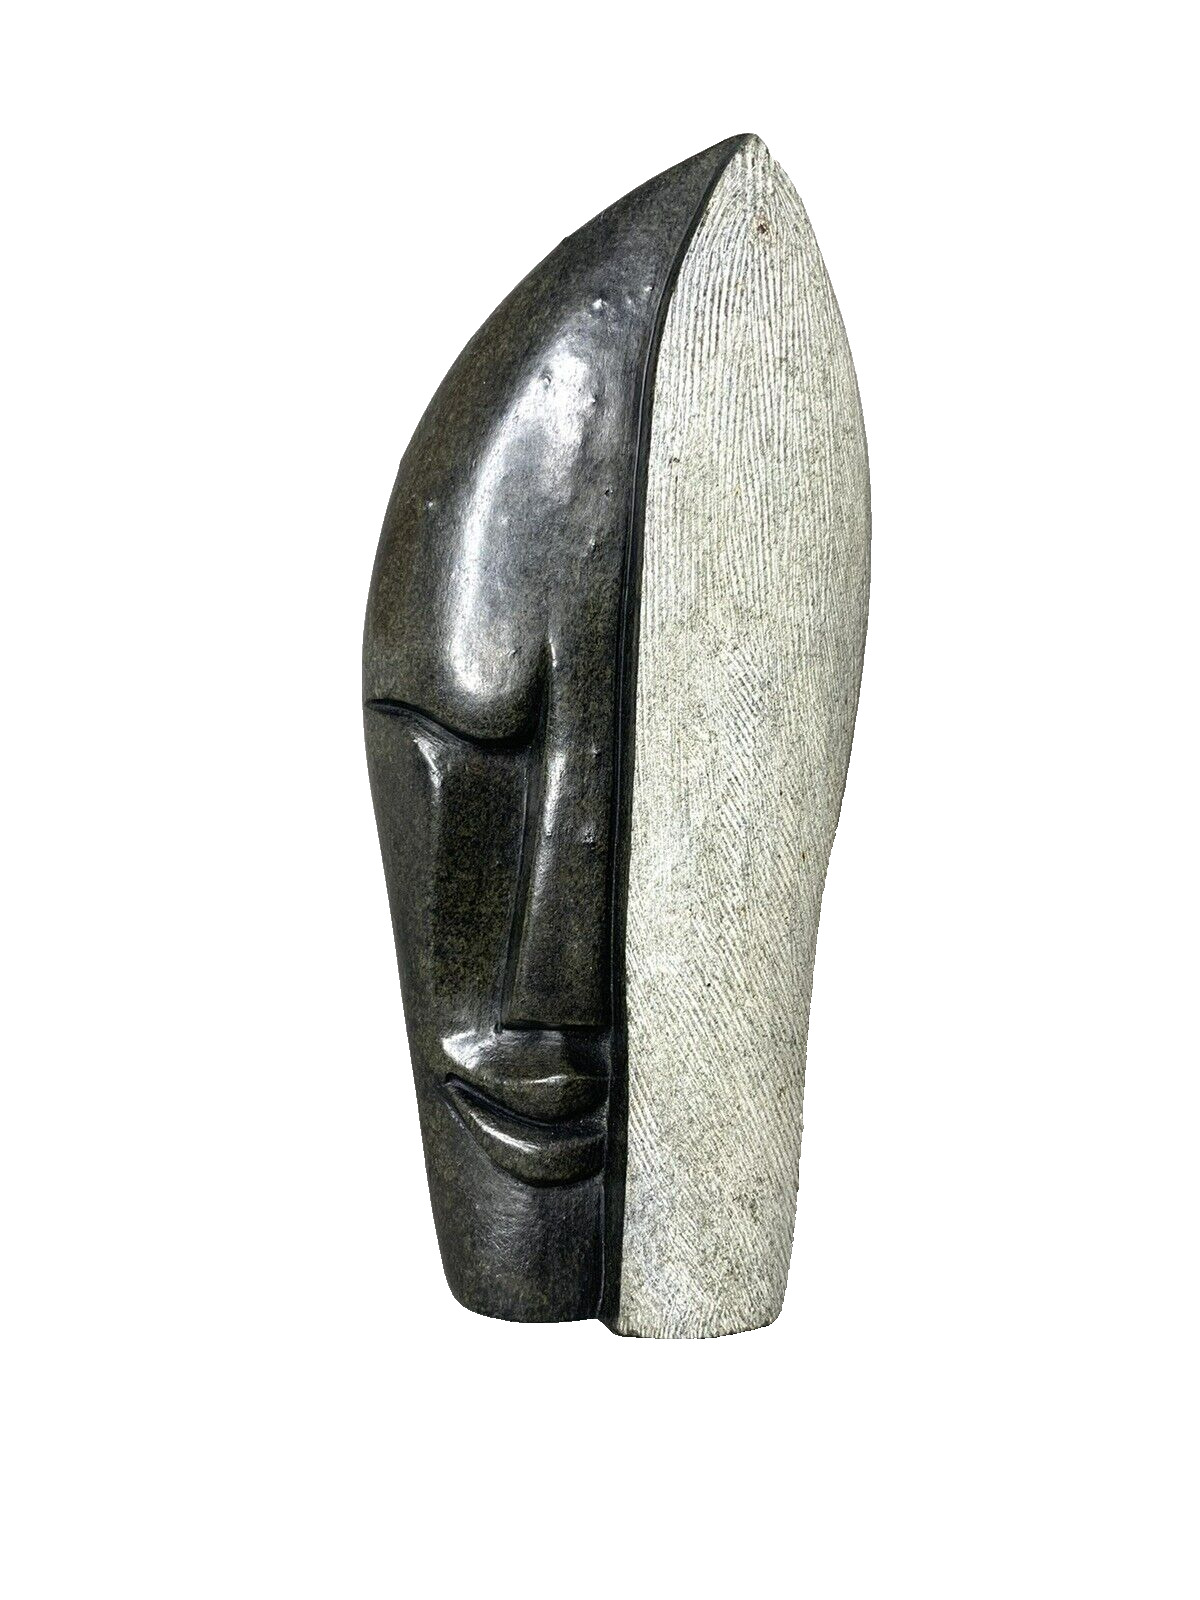 Shona Sculpture Zimbabwe Africa Art Brown & Gray Serpentine Stone SIGNED